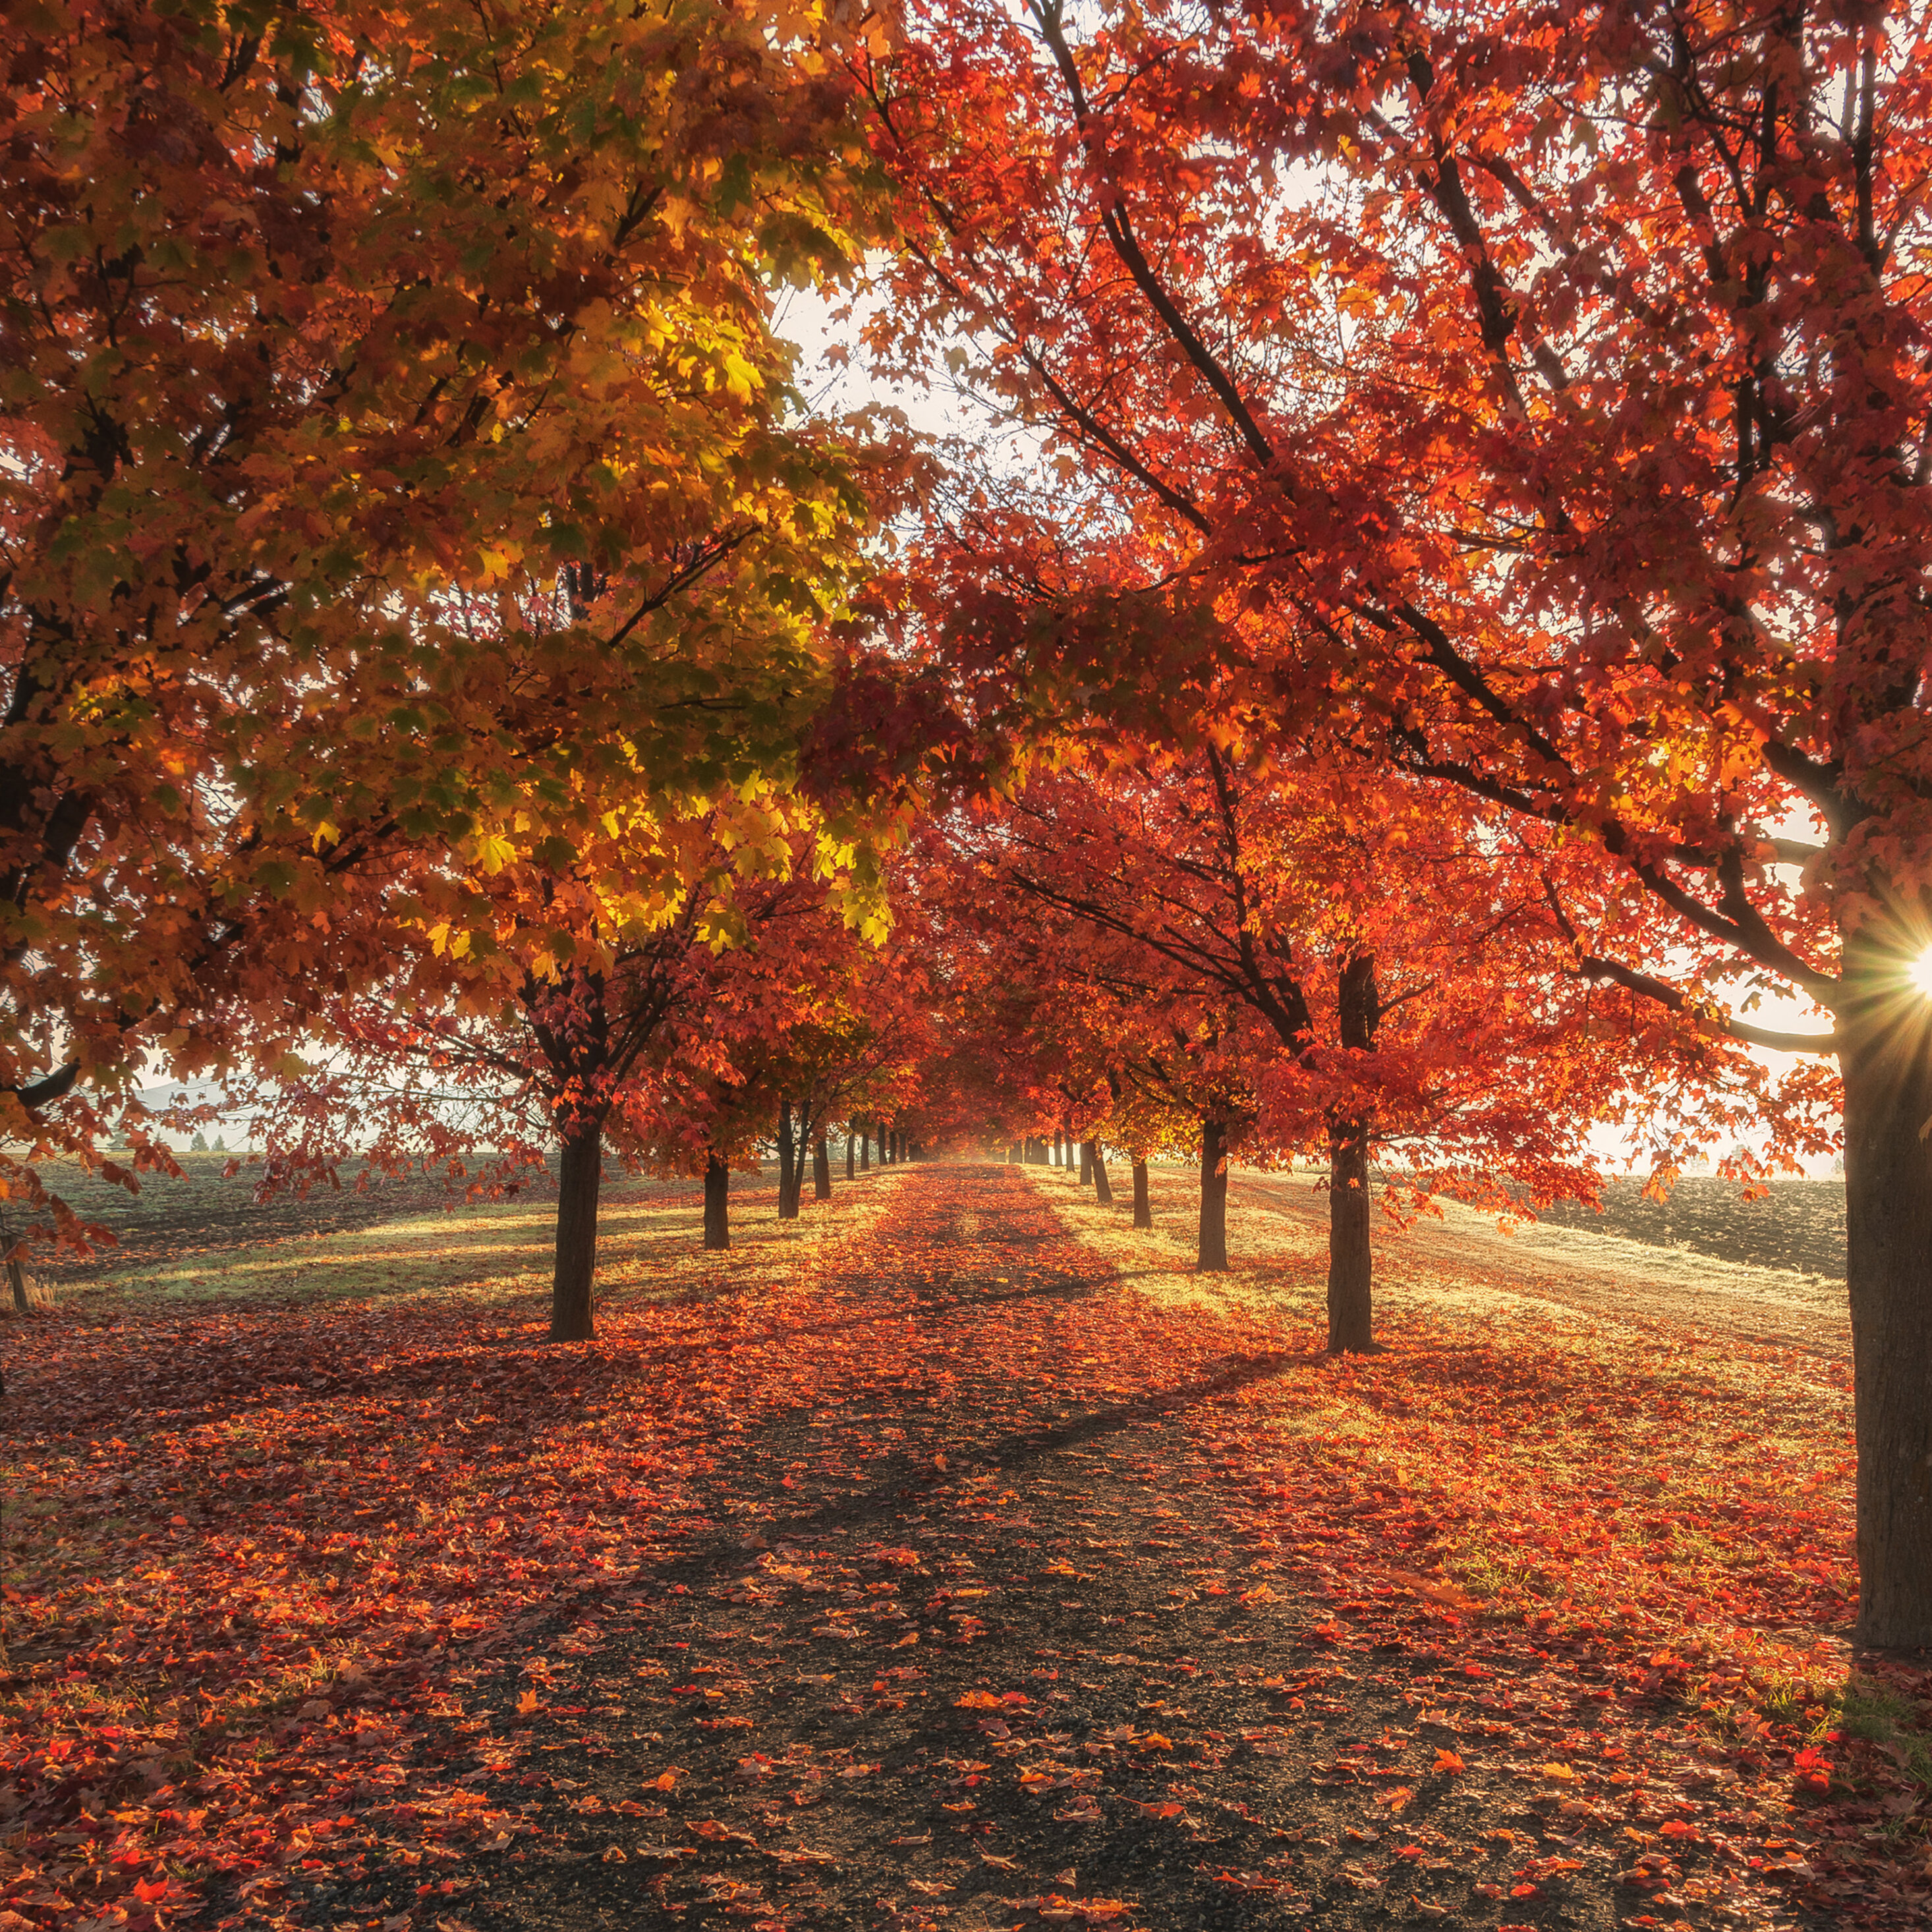 Autumn Fall Season Trees 4k iPad Pro Retina Display HD 4k Wallpaper, Image, Background, Photo and Picture